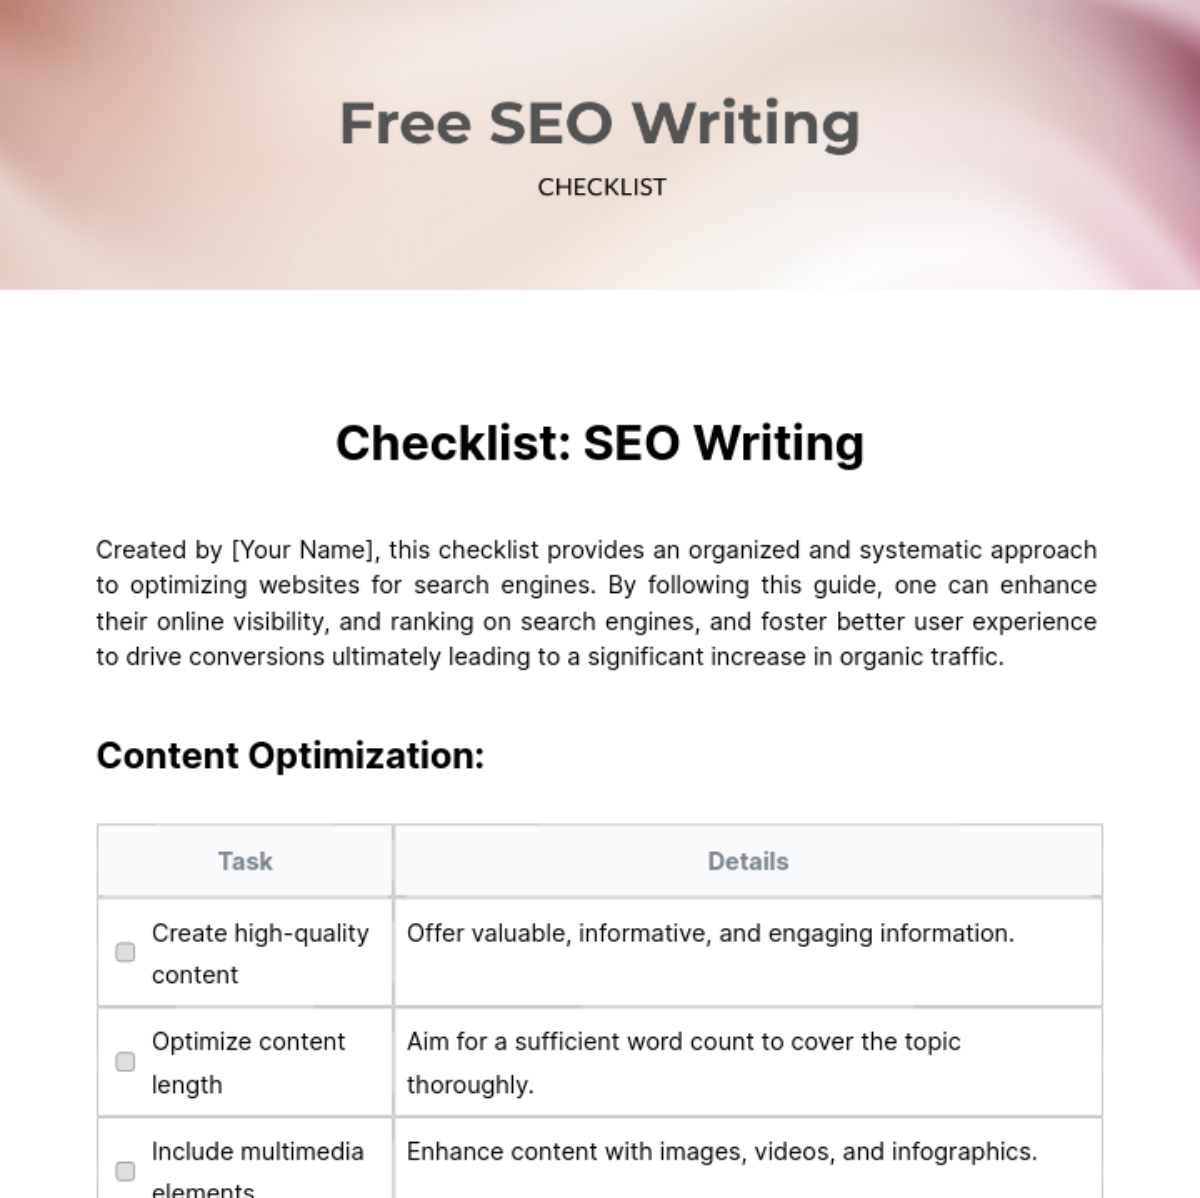 Free SEO Writing Checklist Template